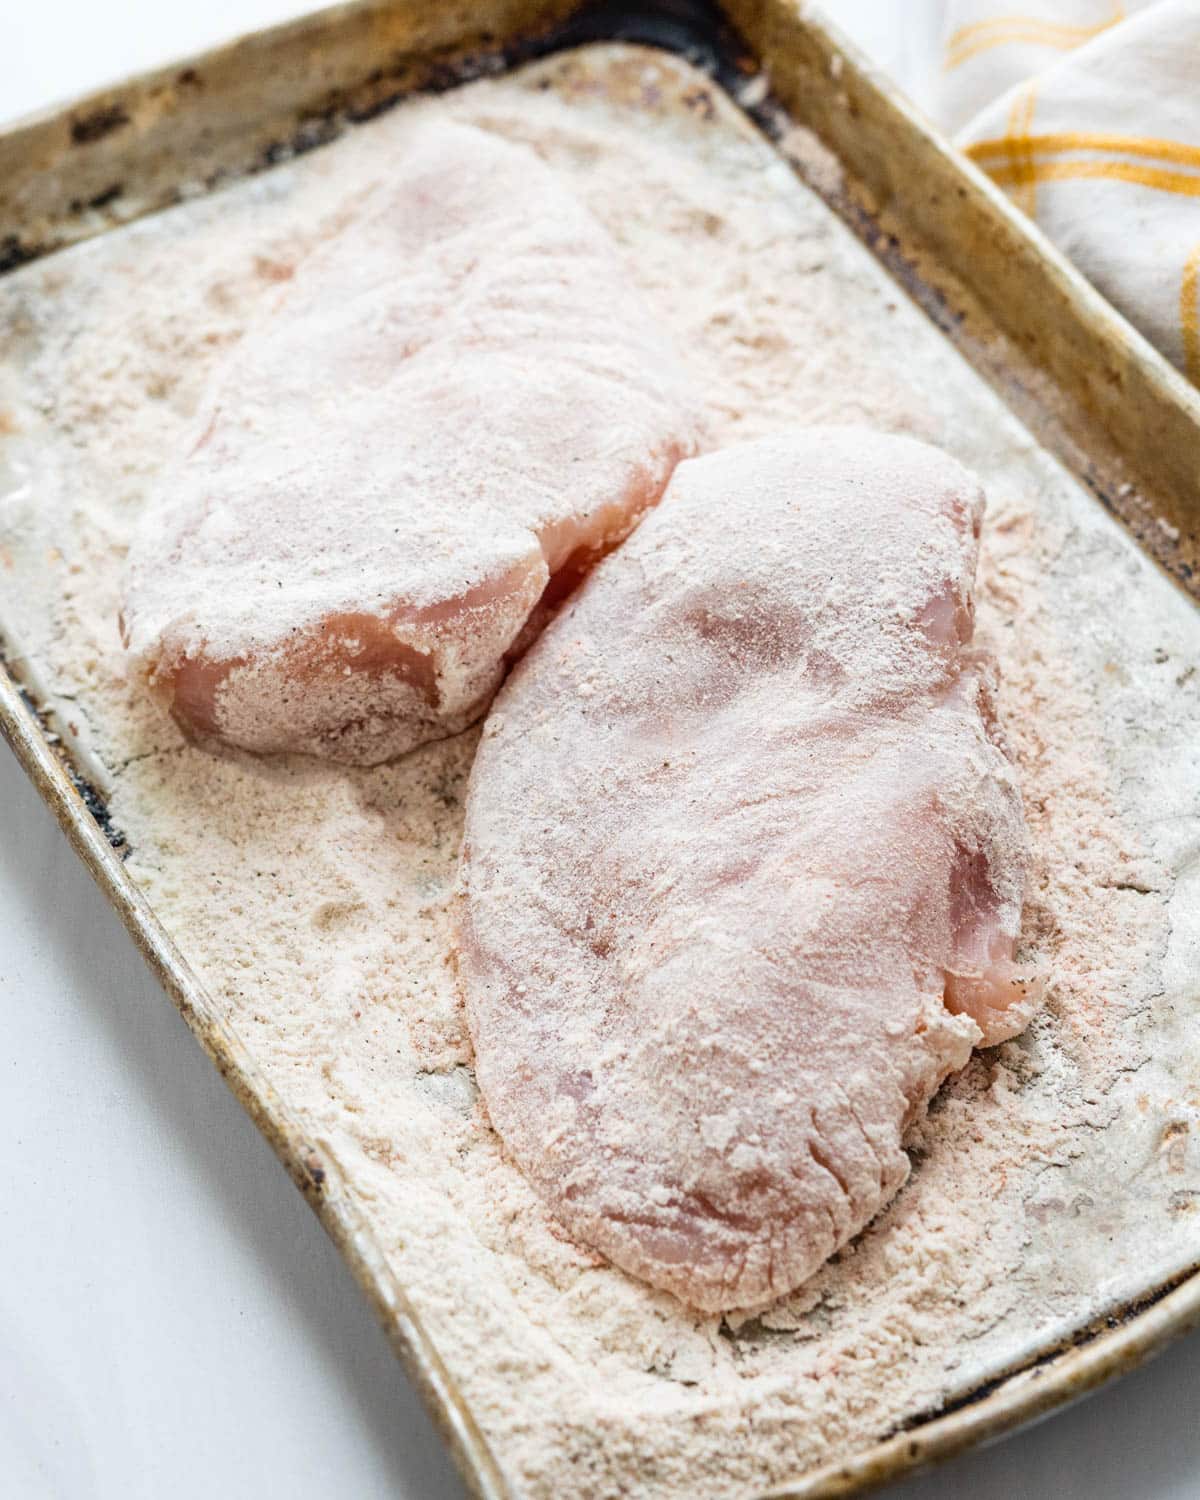 Dredging chicken breasts in seasoned flour.